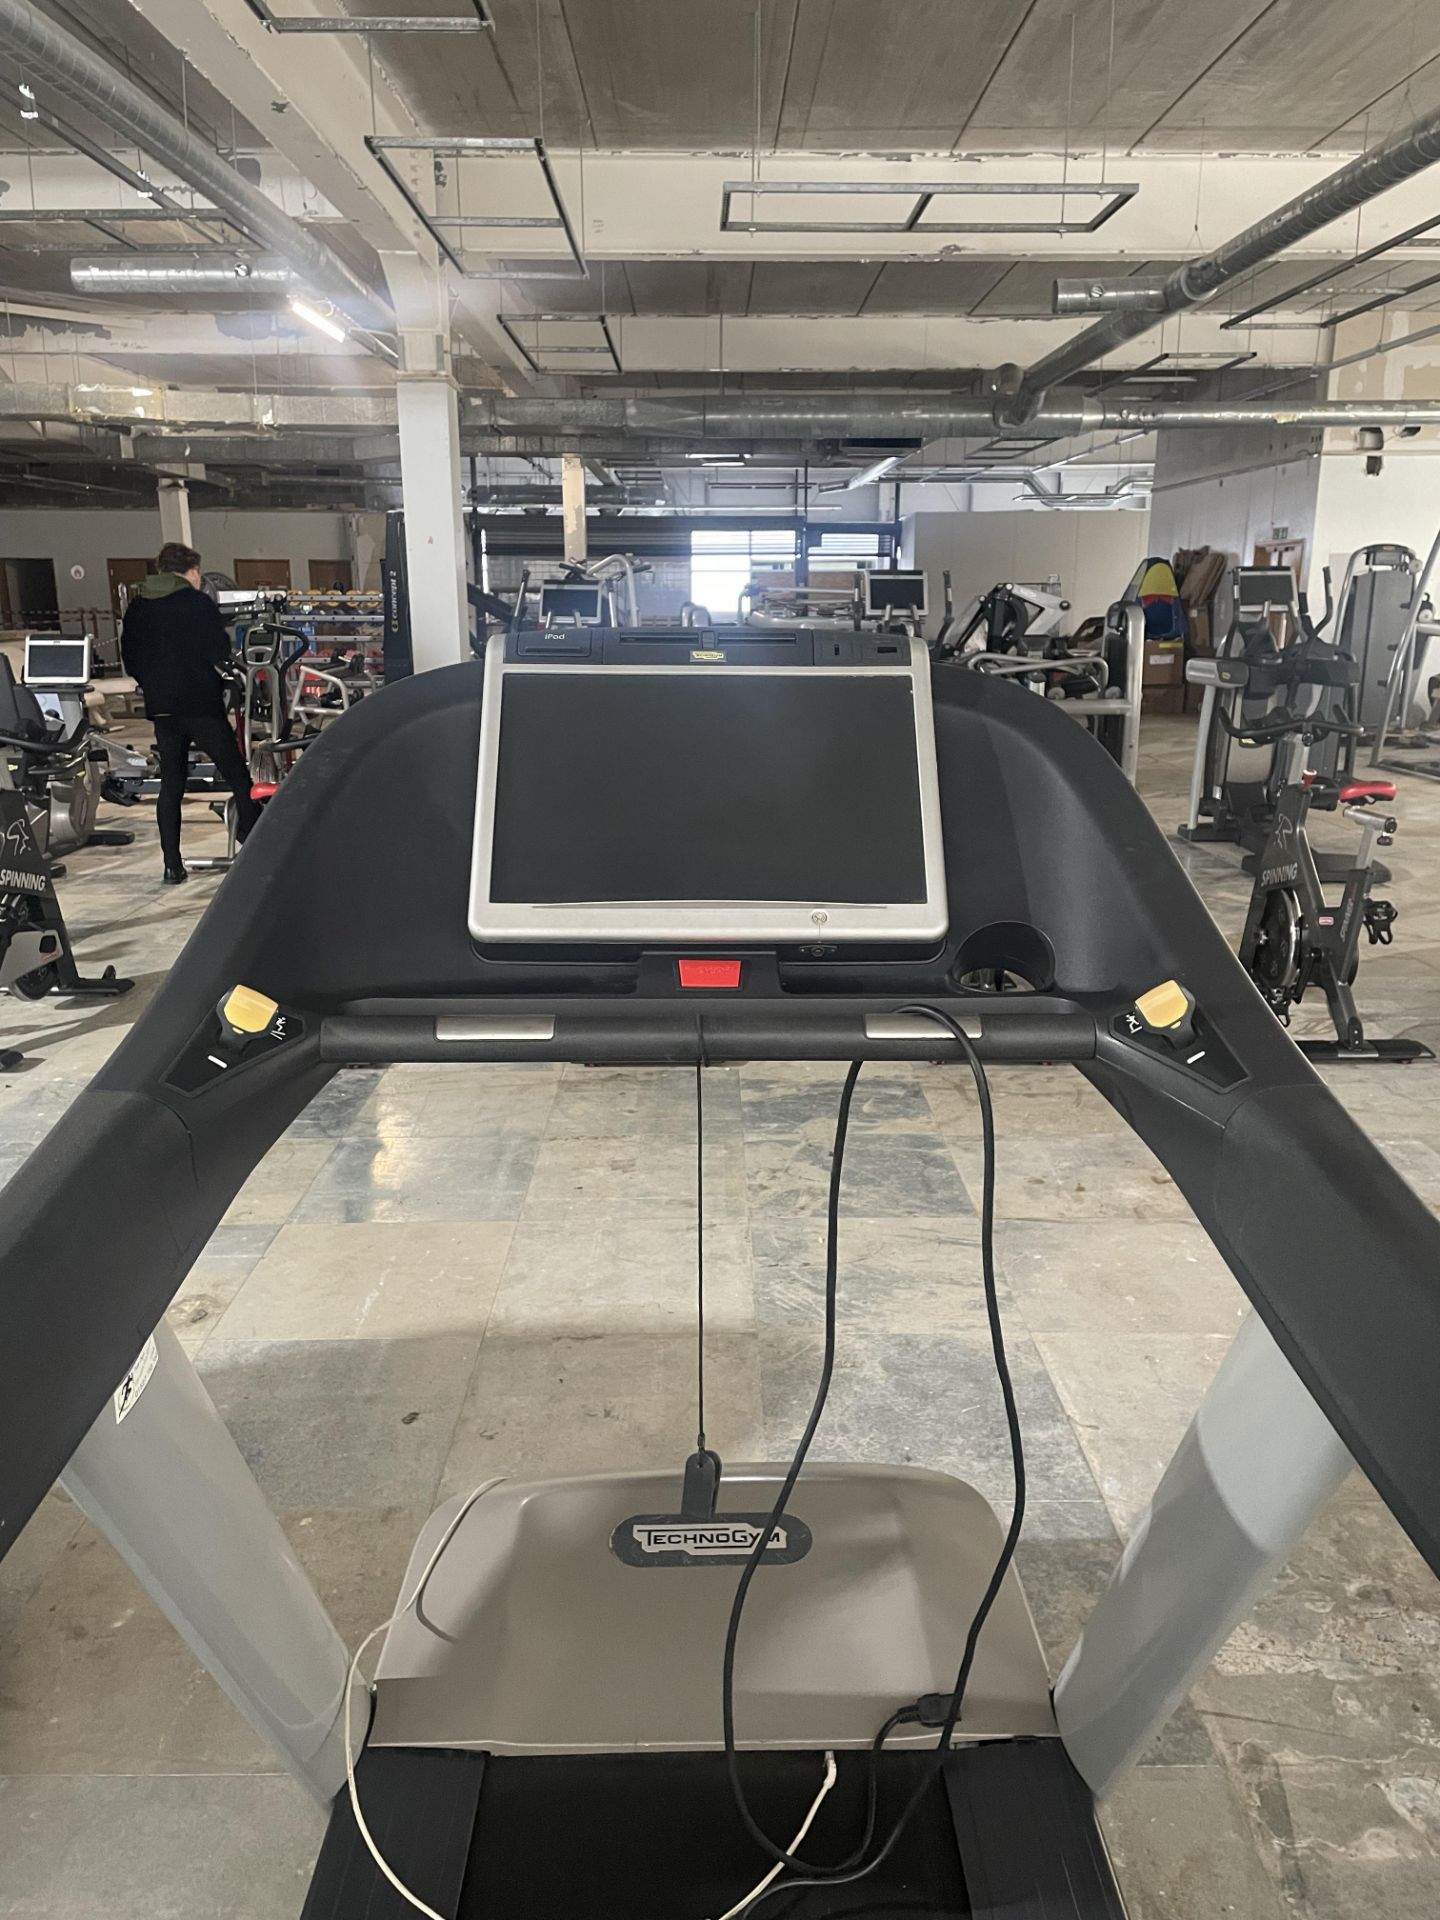 Technogym Treadmill - Image 7 of 7